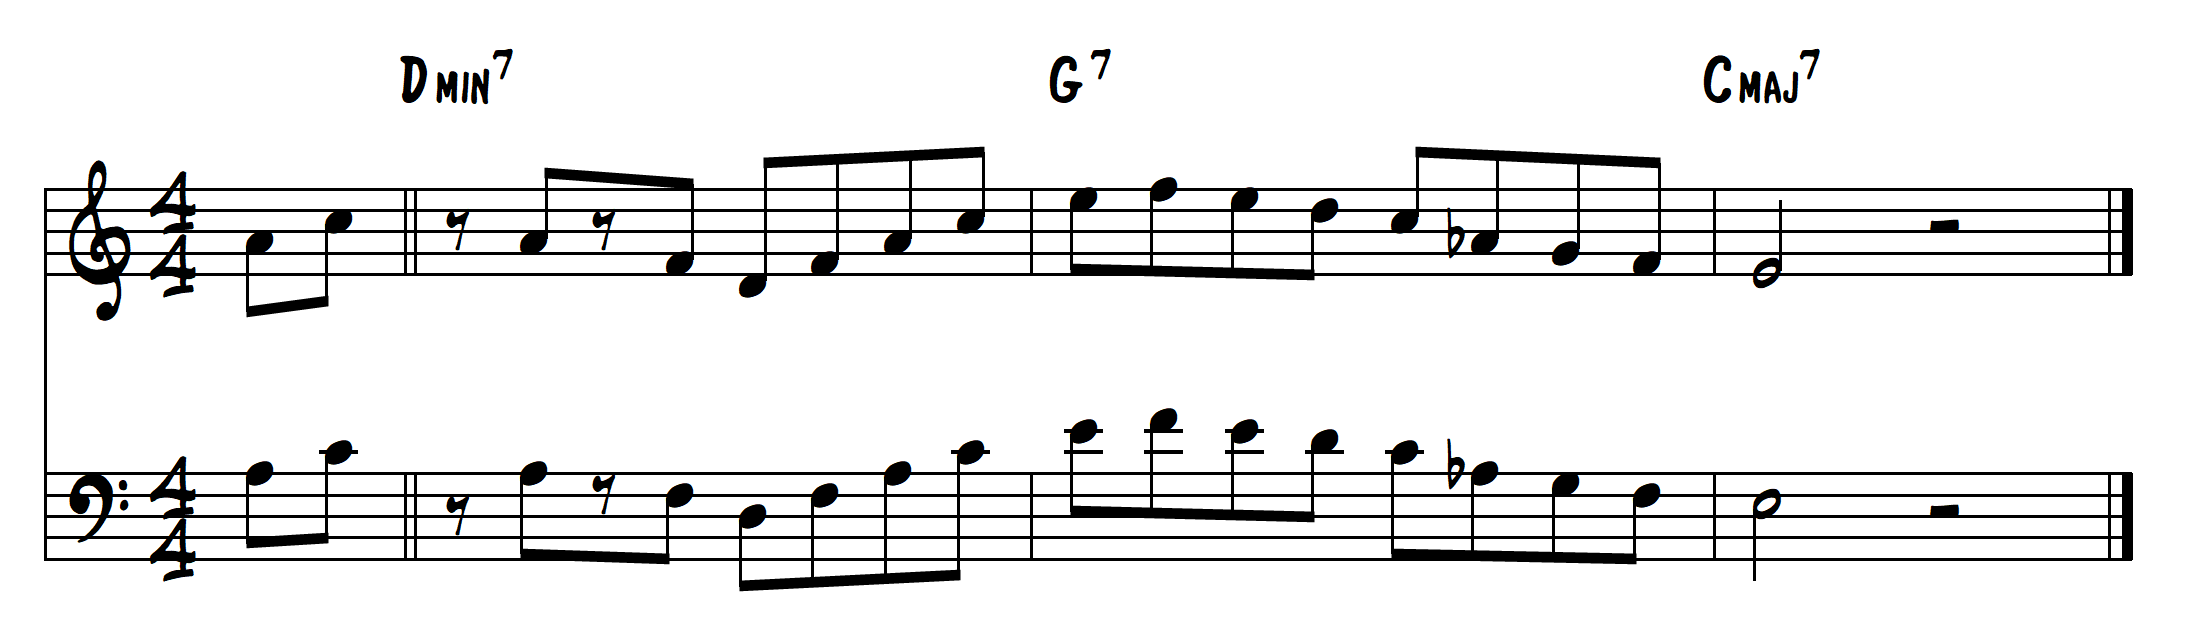 2-5-1 Jazz Improv Lick using the C major scale